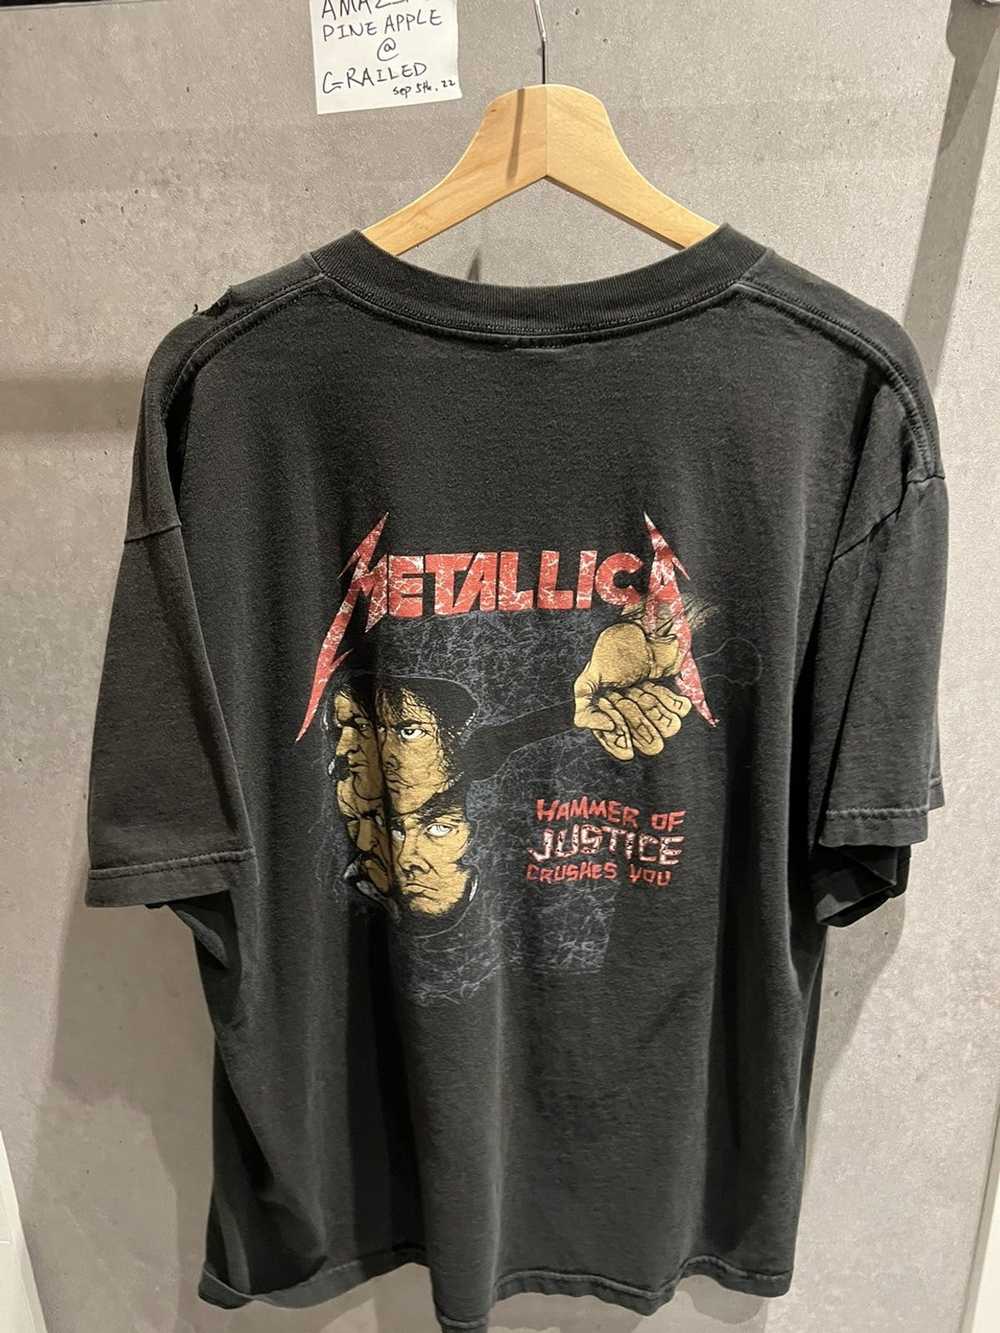 Giant × Metallica Vintage Metallica Tee - image 5